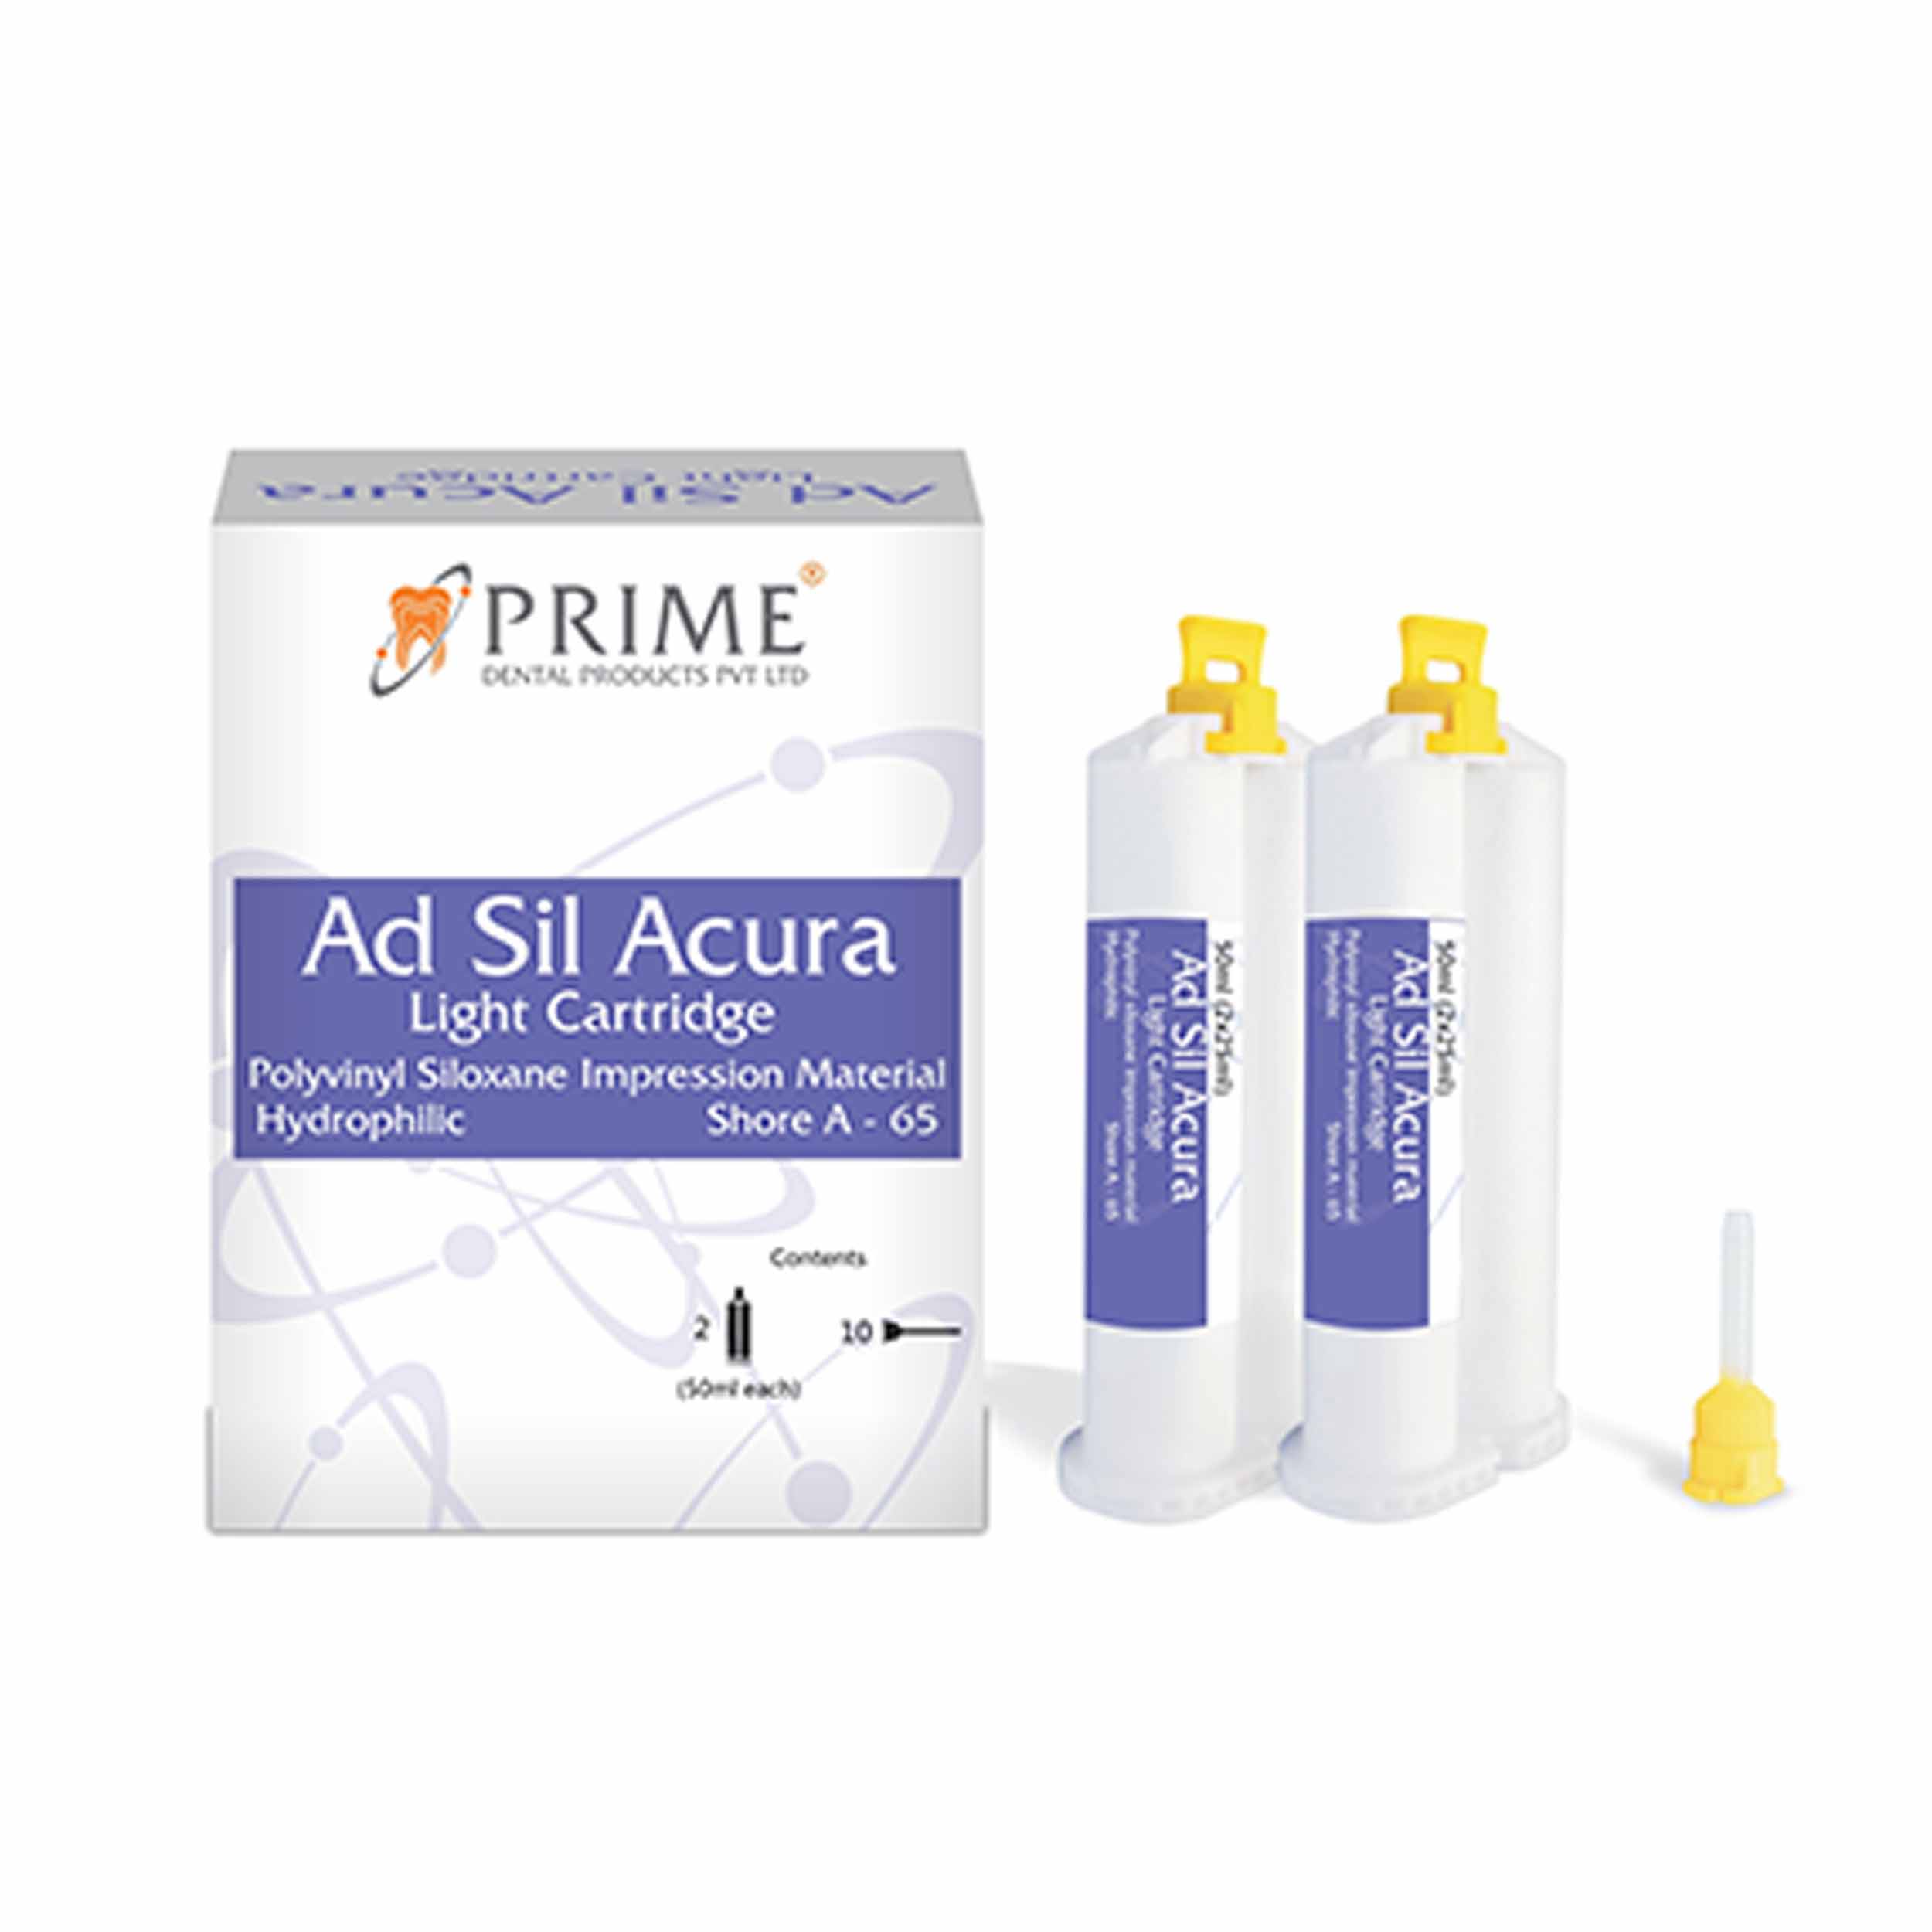 Prime Ad Sil Acura Kit Light Cartridge 2x50ml